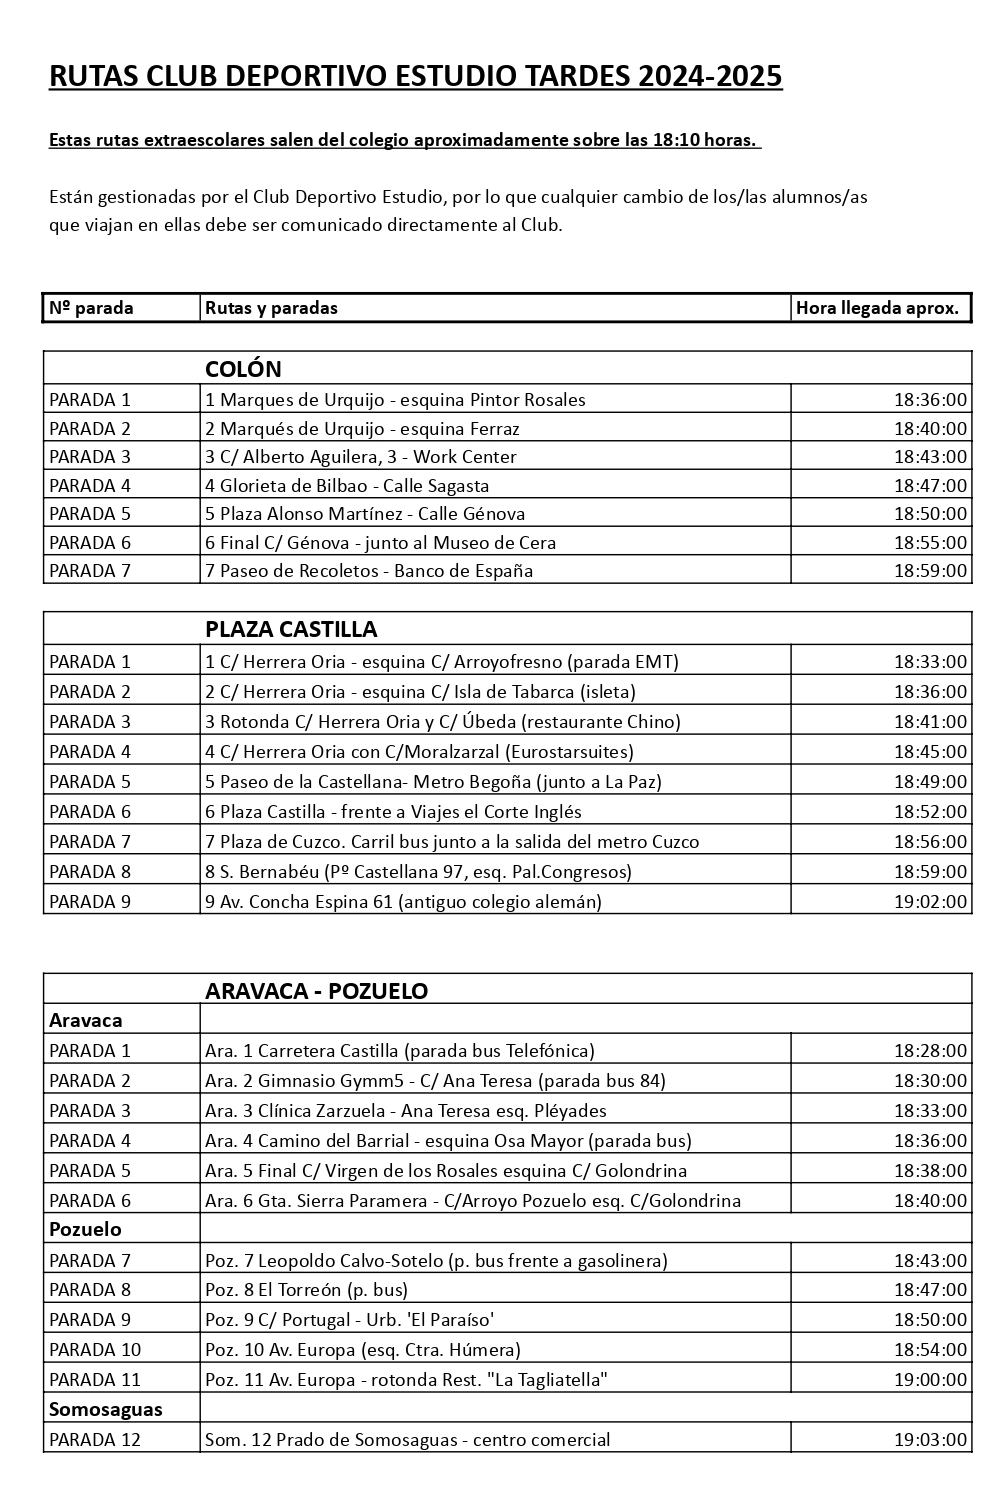 Rutas Club Deportivo Estudio curso 2024-25, a 25.04.24.xlsx - Hoja1 (1)_page-0001.jpg